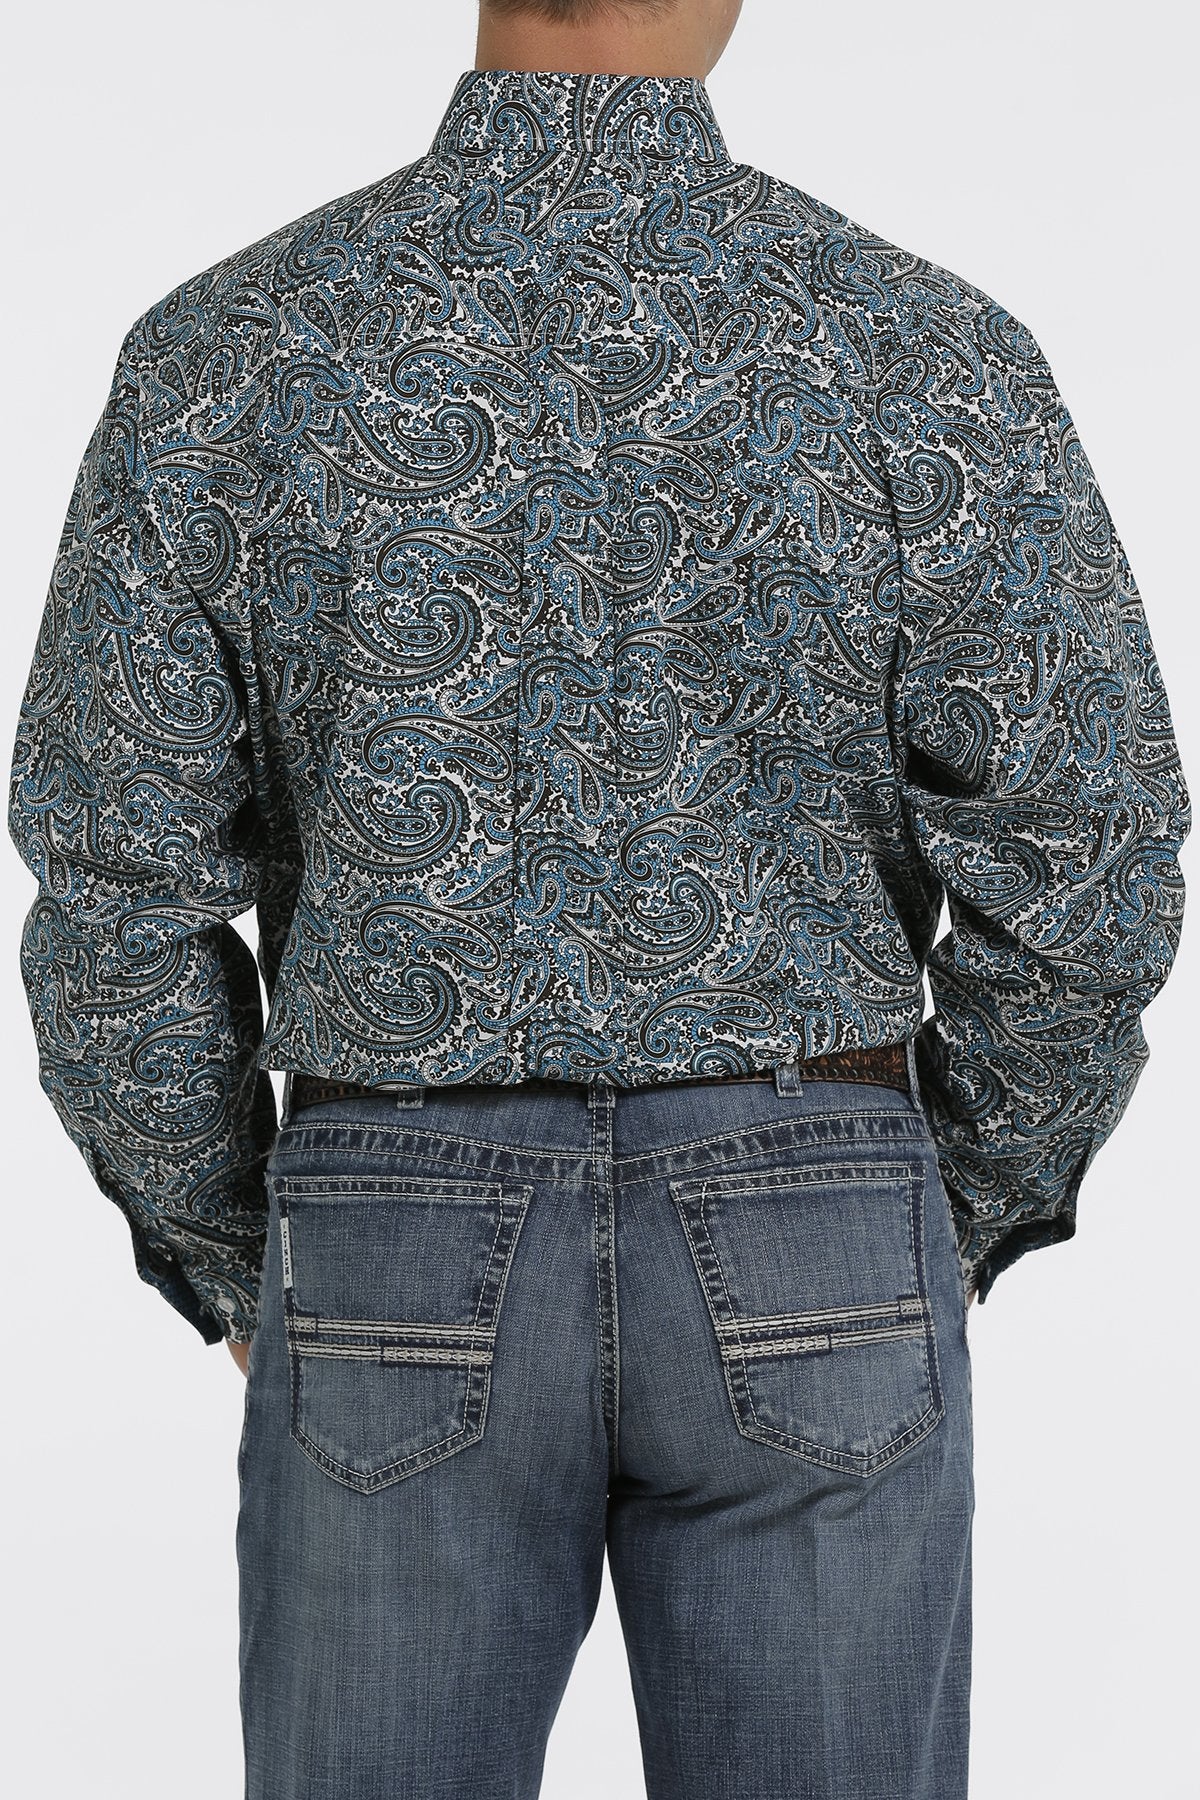 Cinch Mens Paisley Print L/S Shirt - Turquoise - MTW1105369